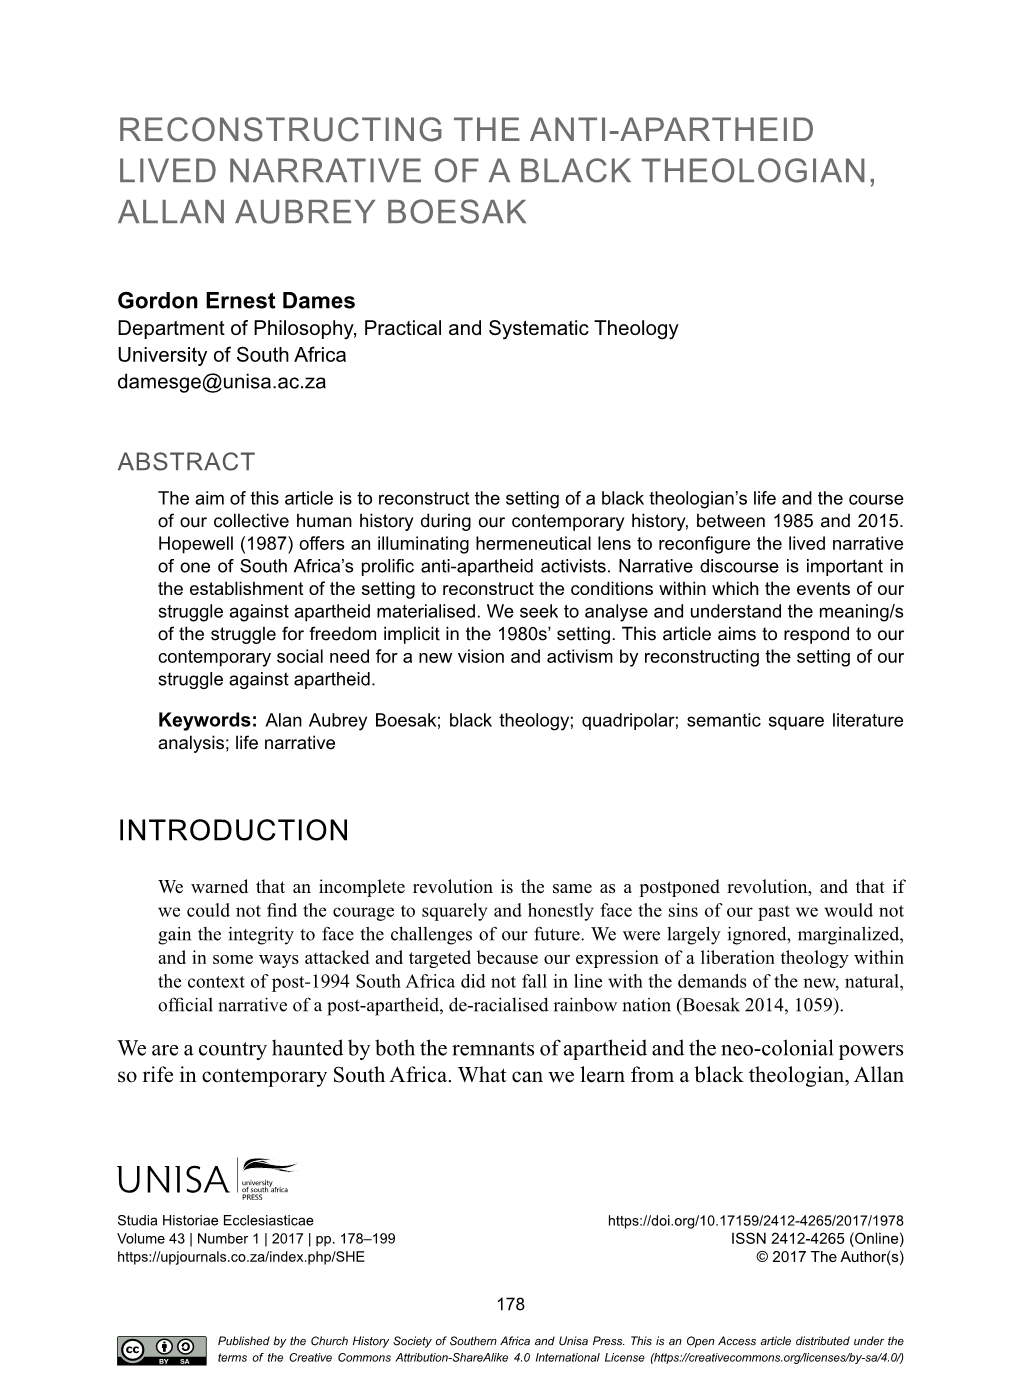 Reconstructing the Anti-Apartheid Lived Narrative of a Black Theologian, Allan Aubrey Boesak